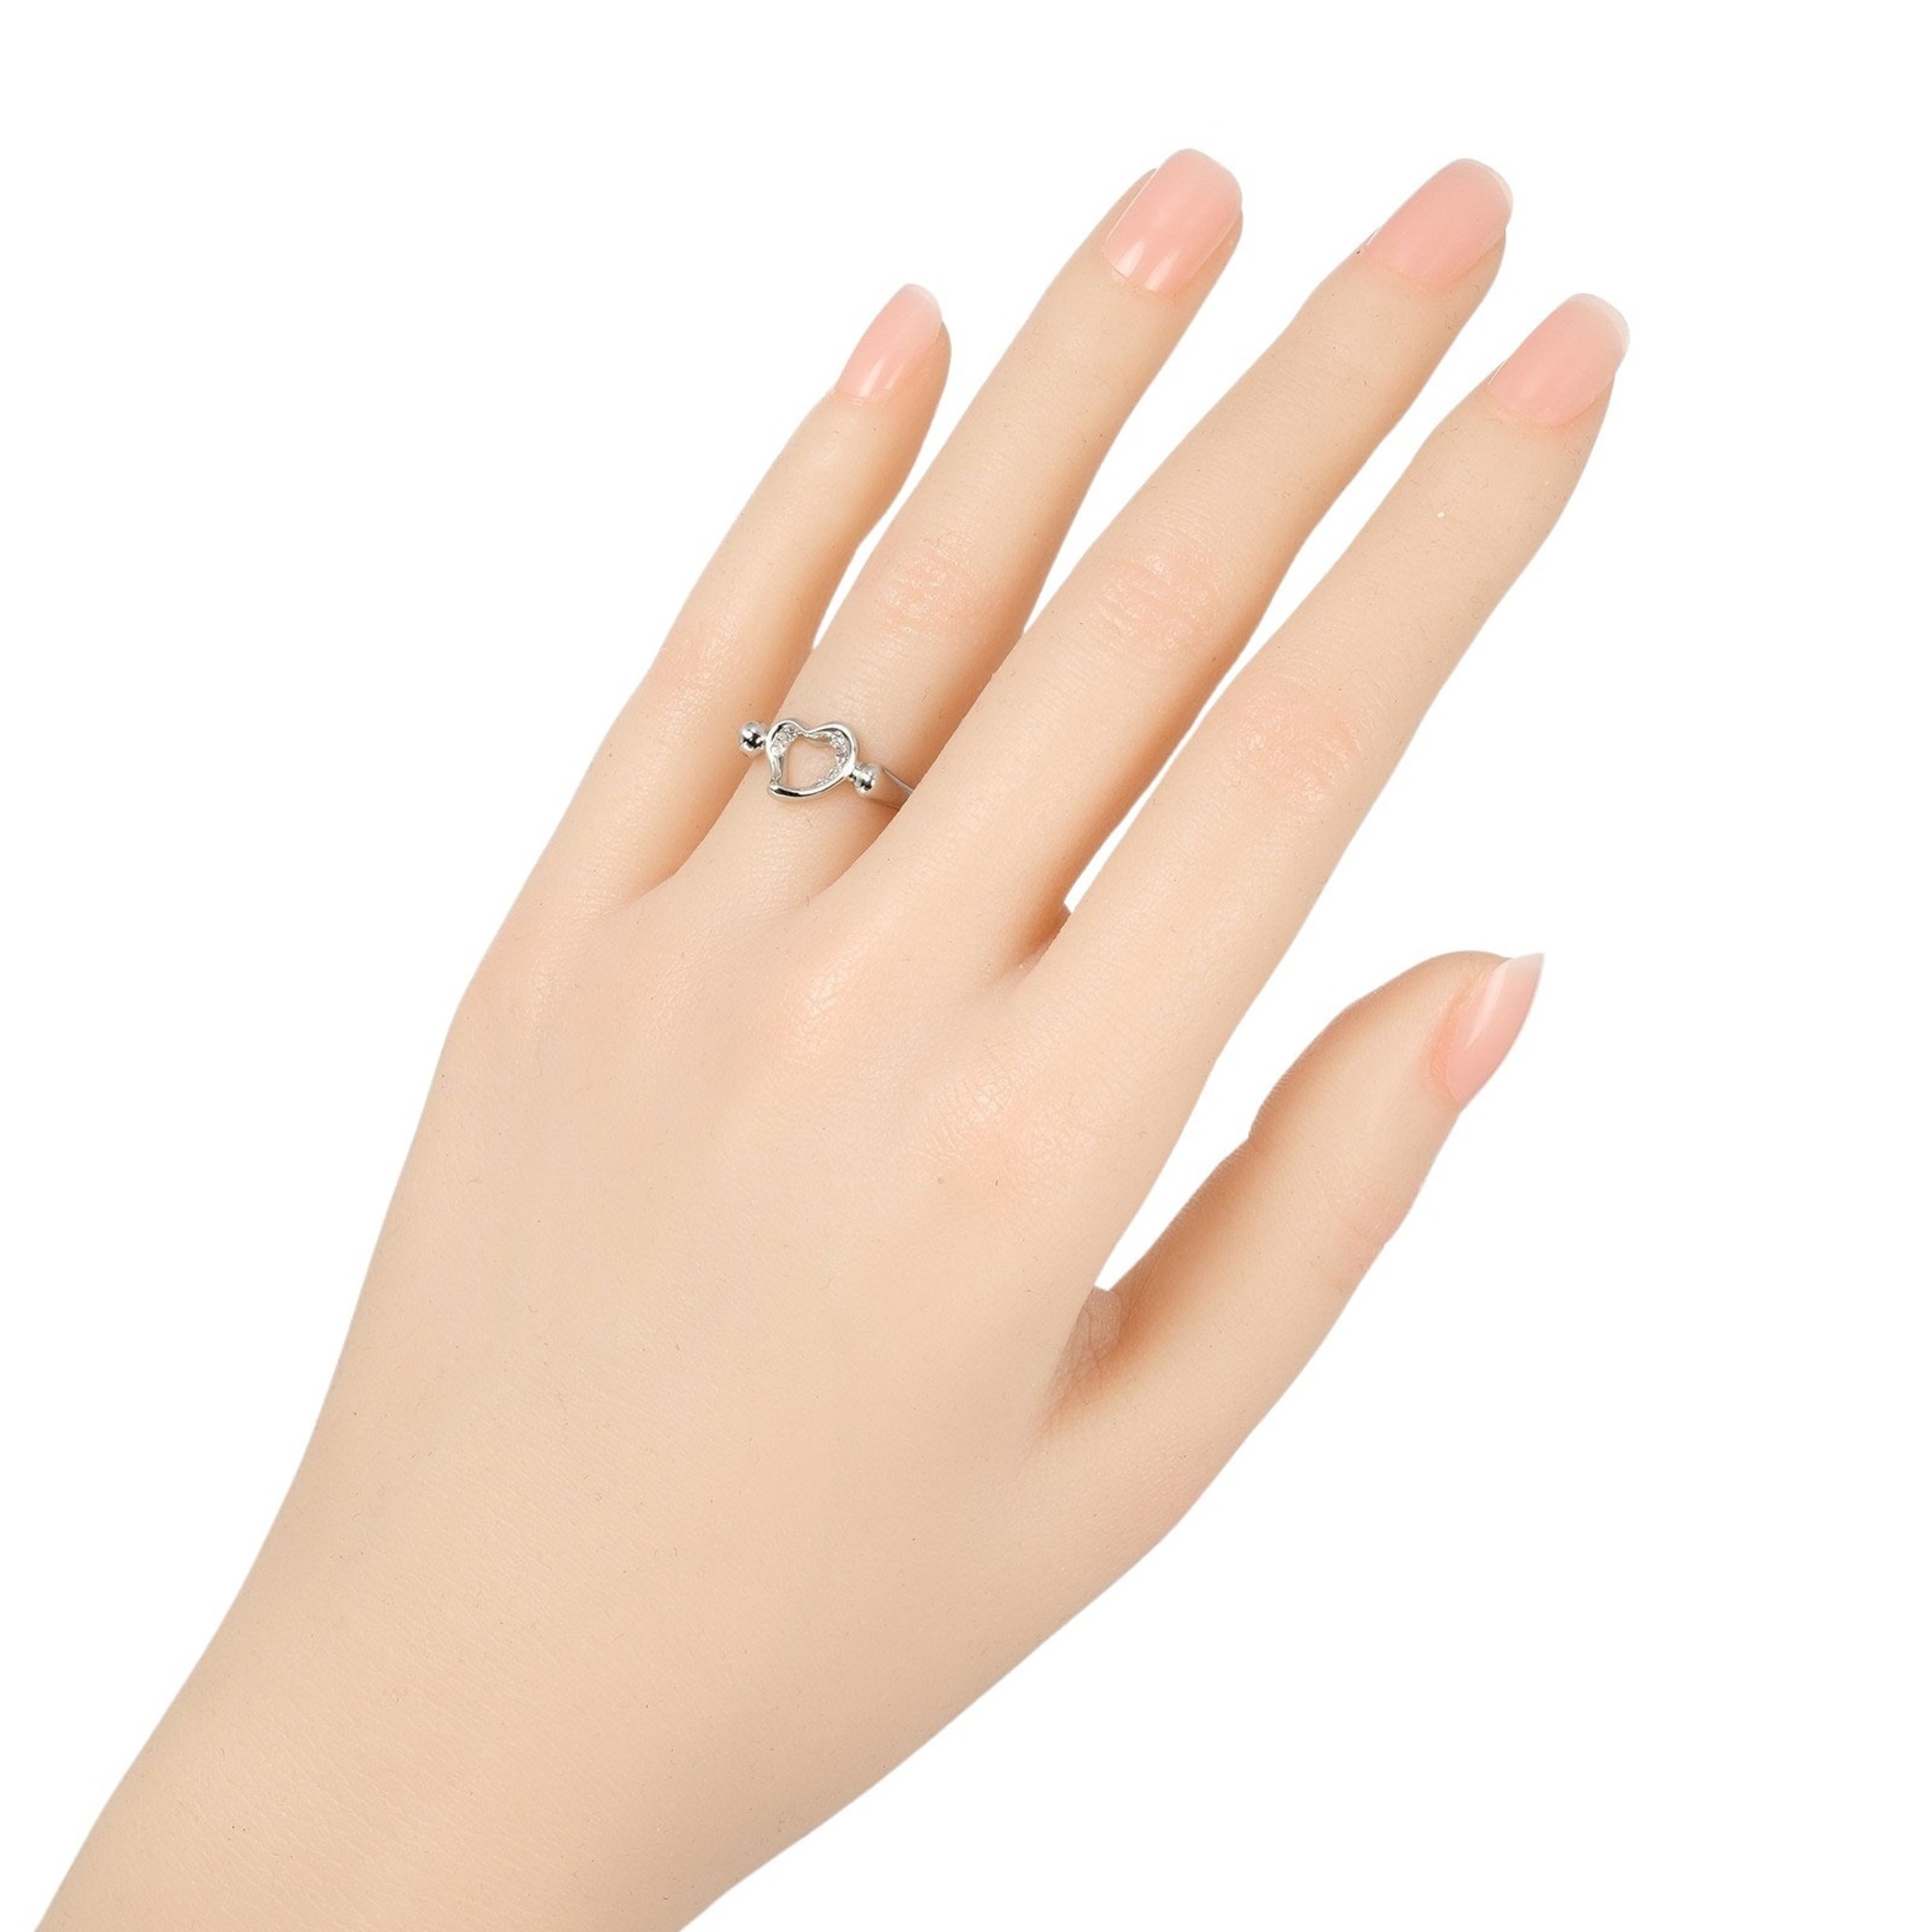 Tiffany & Co. Heart Ring, Size 7, Pt950 Platinum, Diamond, Approx. 5.58g